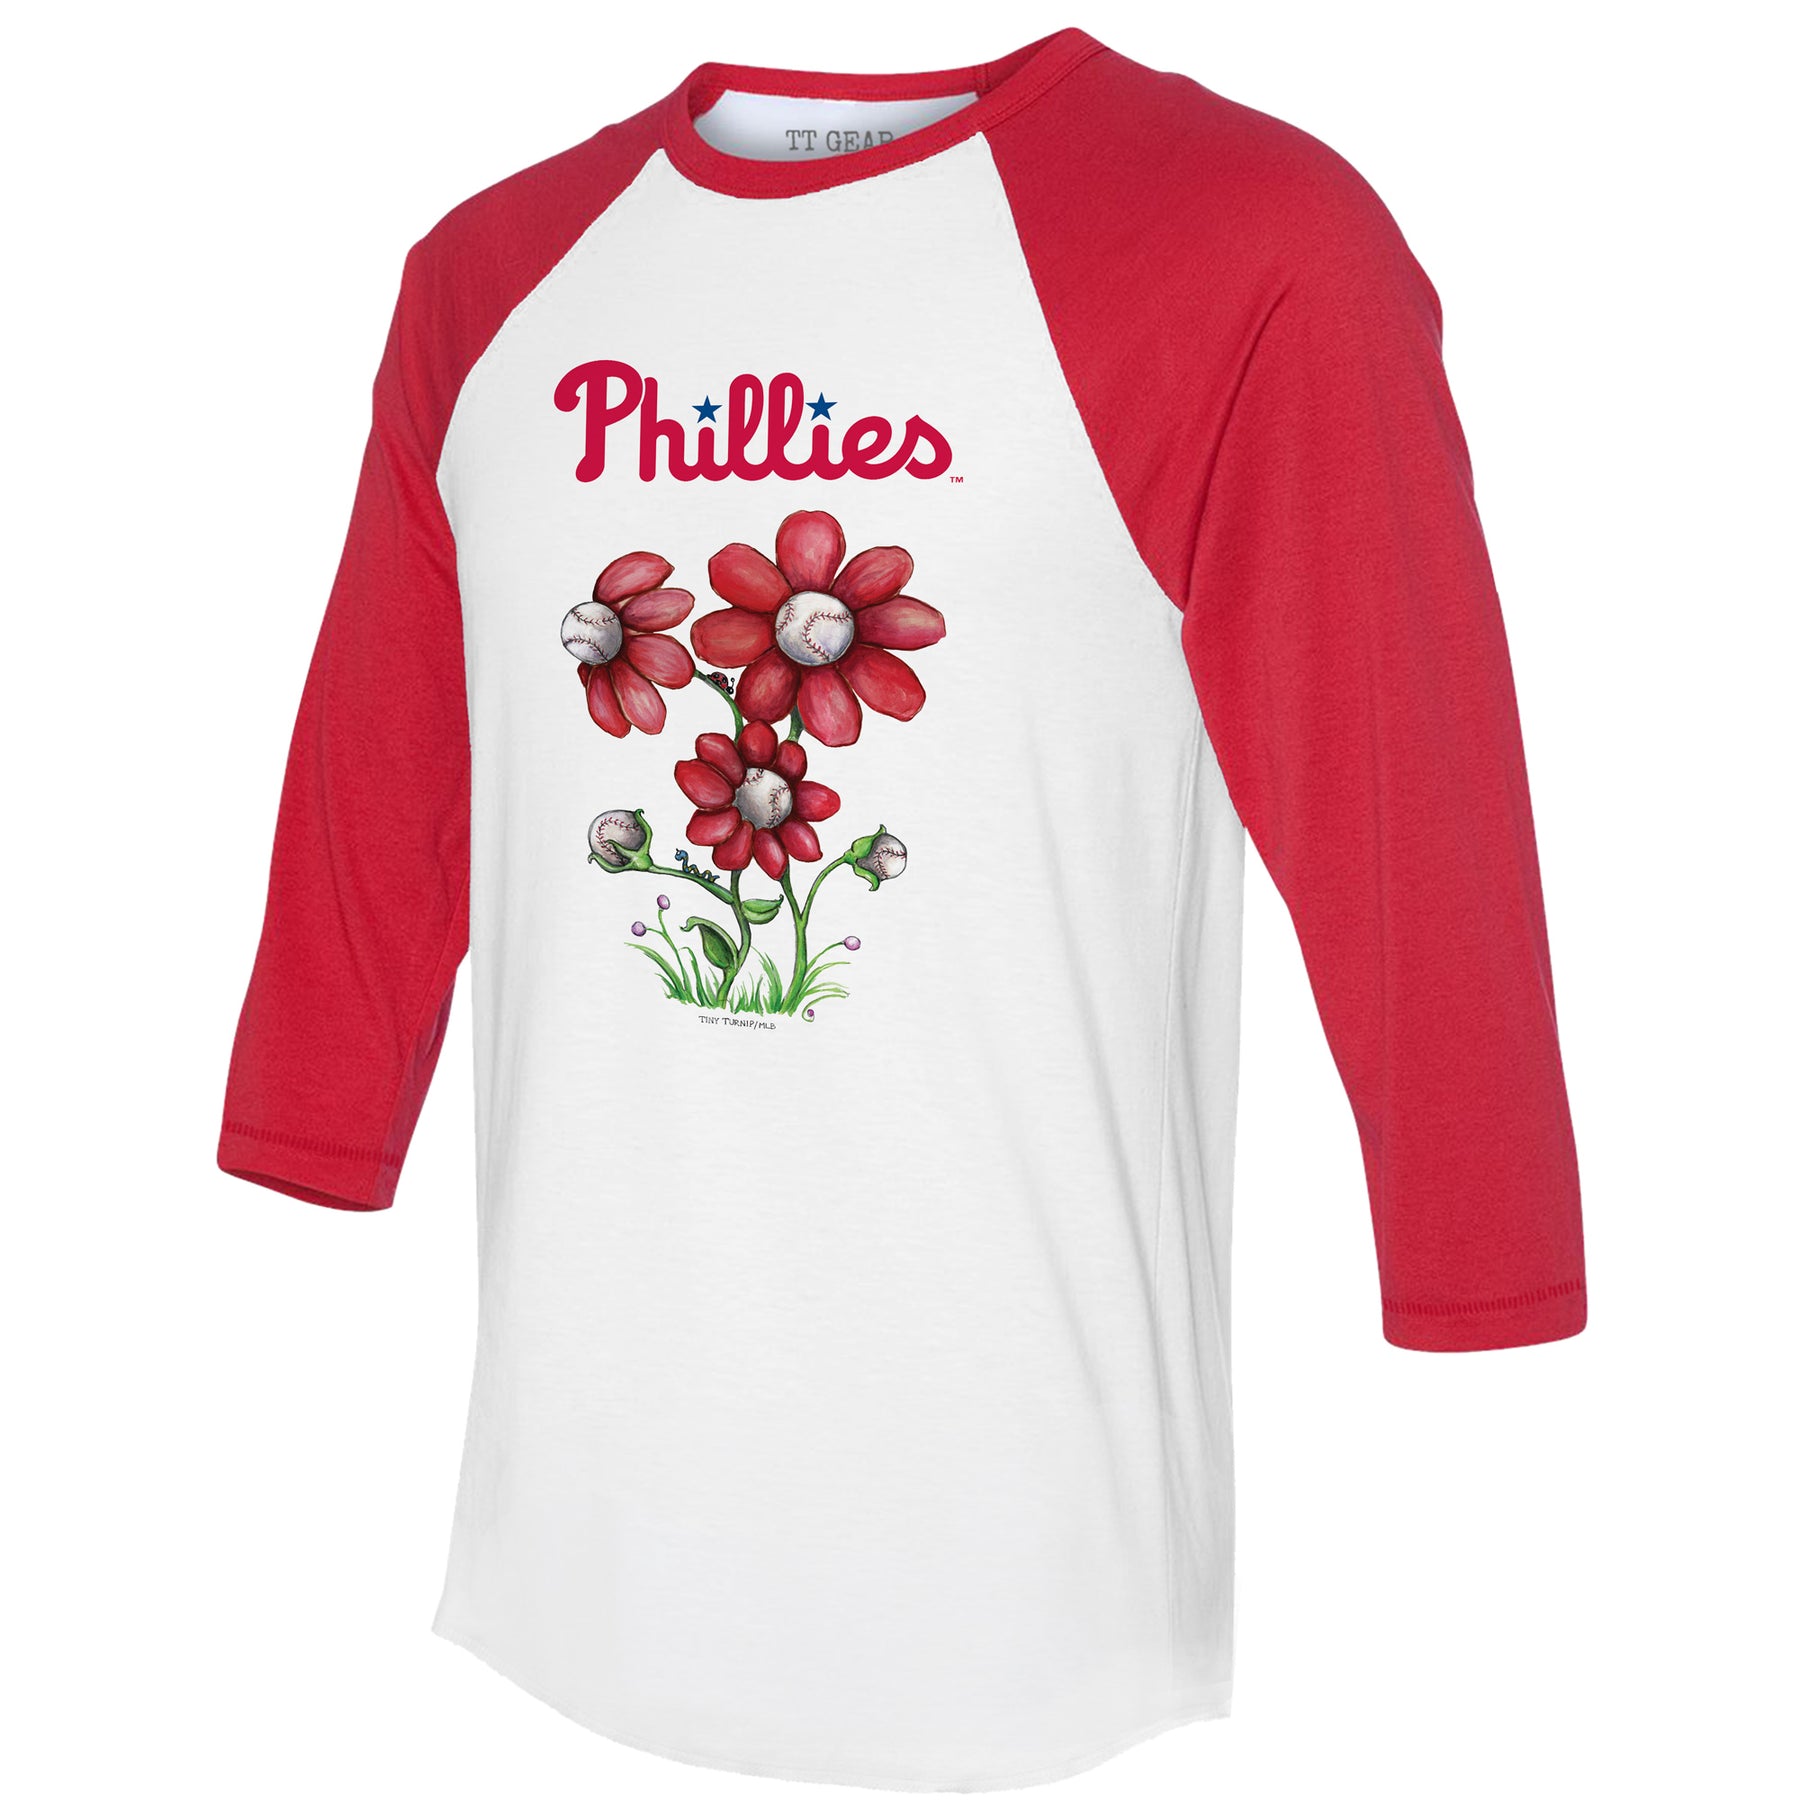 Philadelphia Phillies Blooming Baseballs 3/4 Red Sleeve Raglan